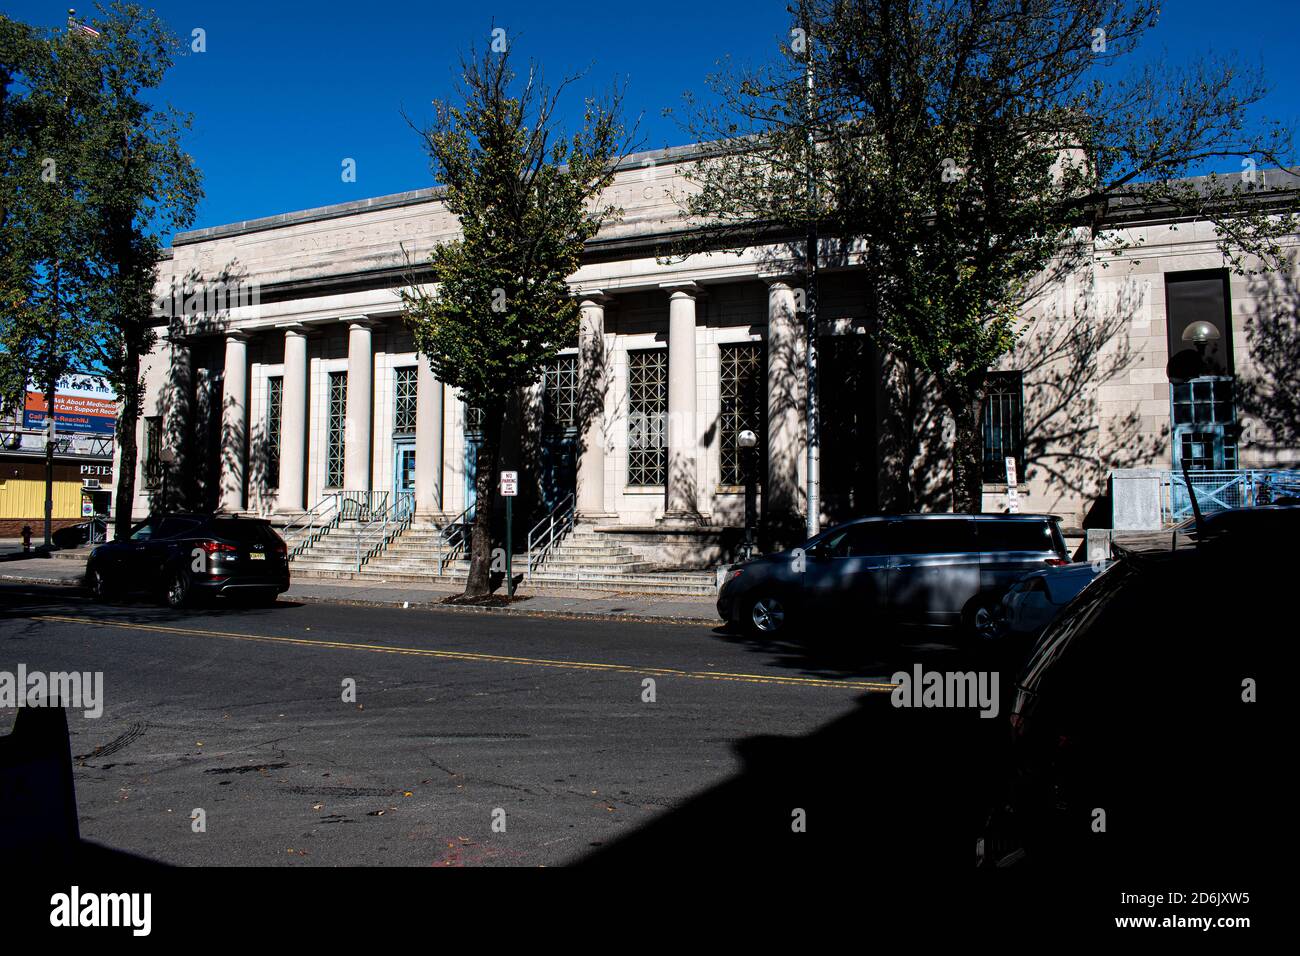 The Plainfield NJ United States Postal Building Stock Photo